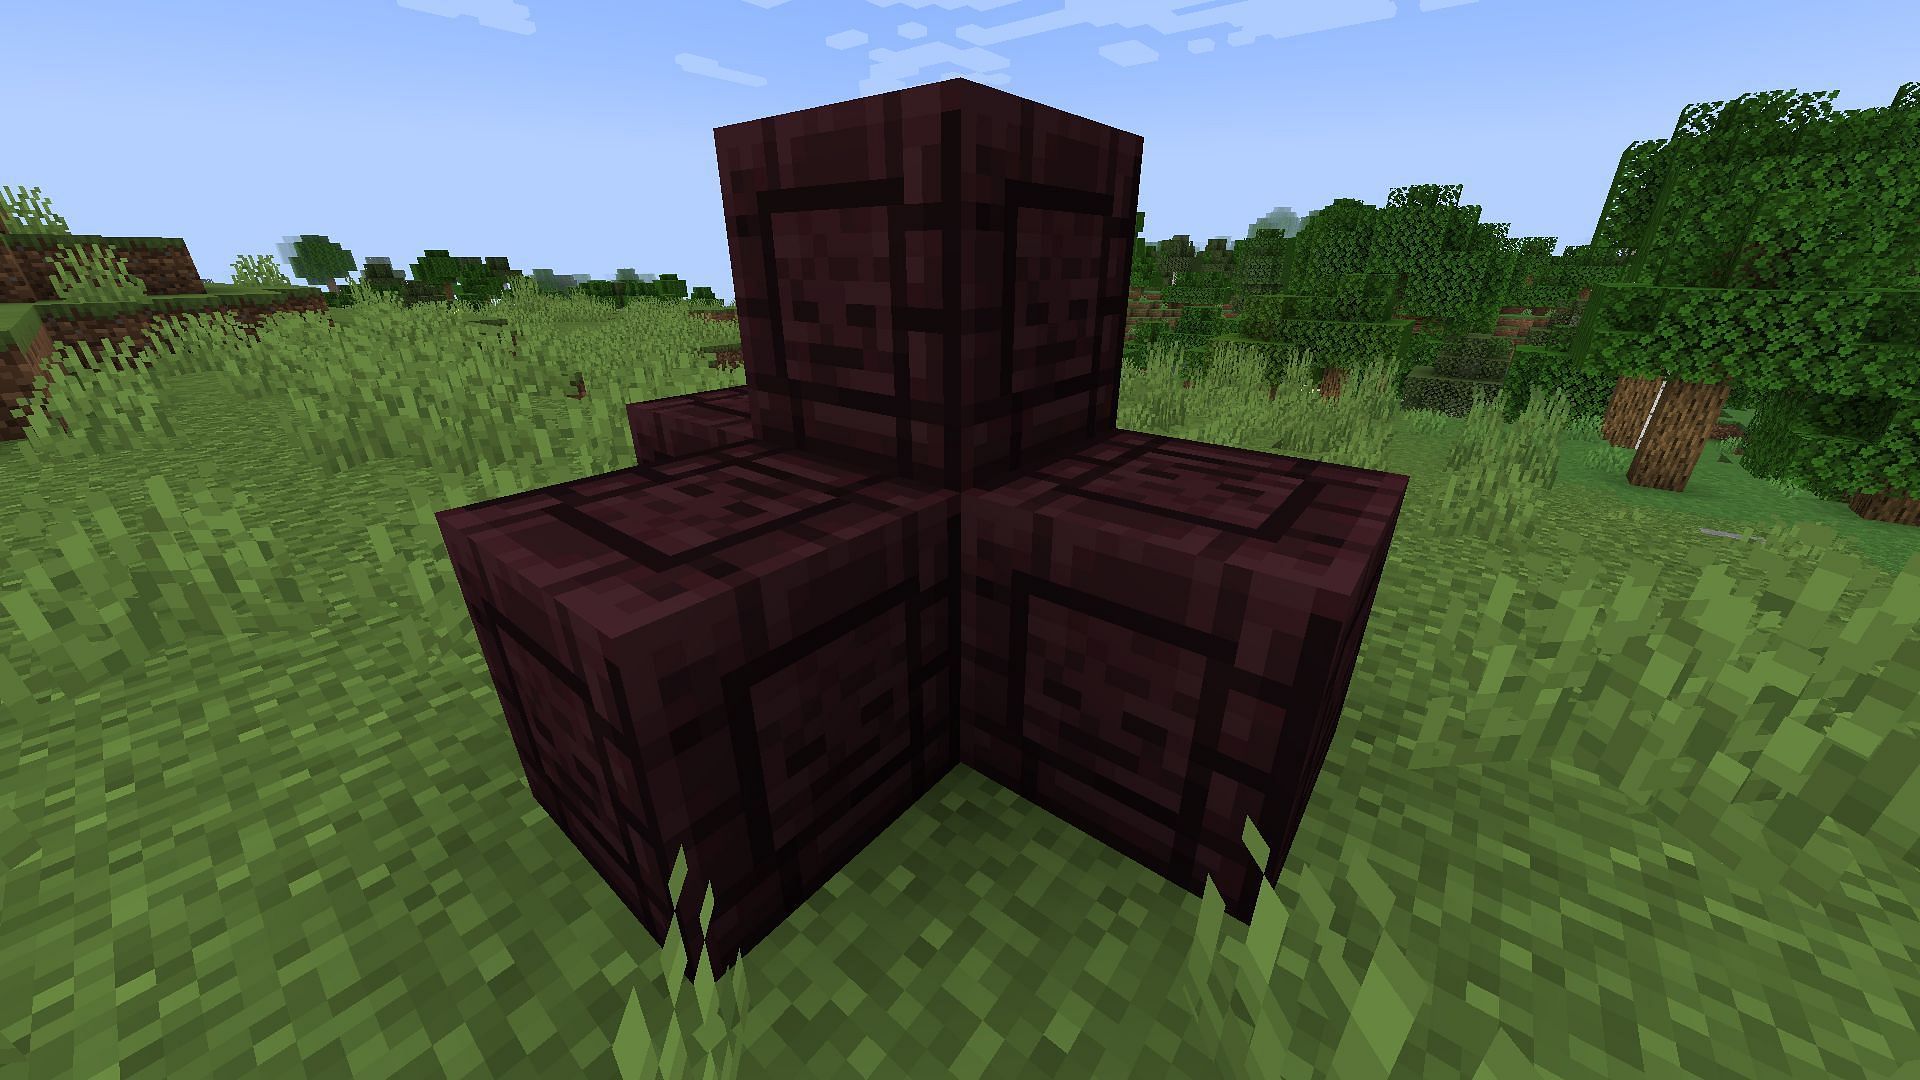 Chiseled Nether bricks (Image via Minecraft 1.19 update)